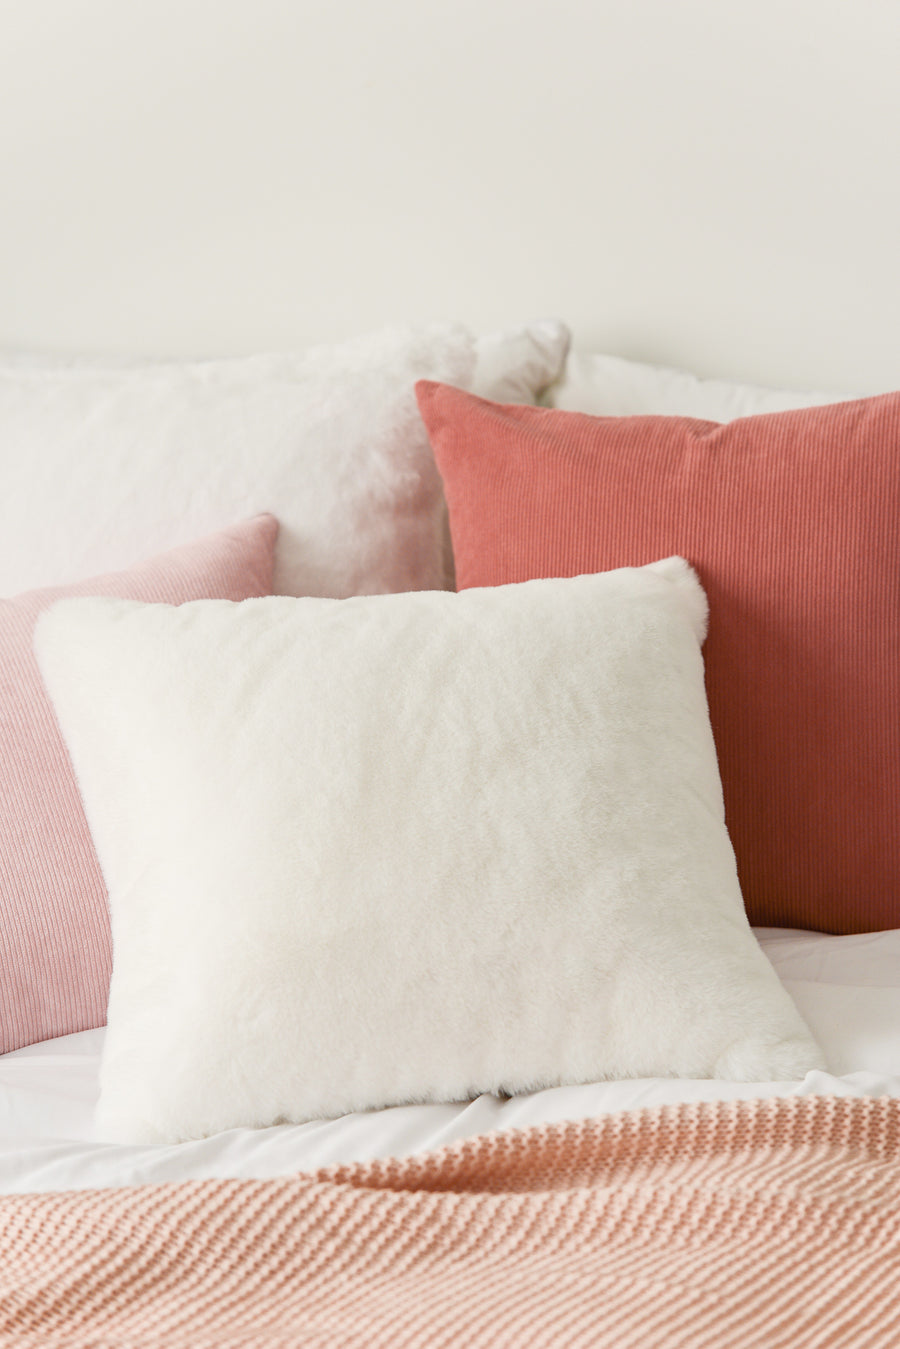 sofa pillow covers